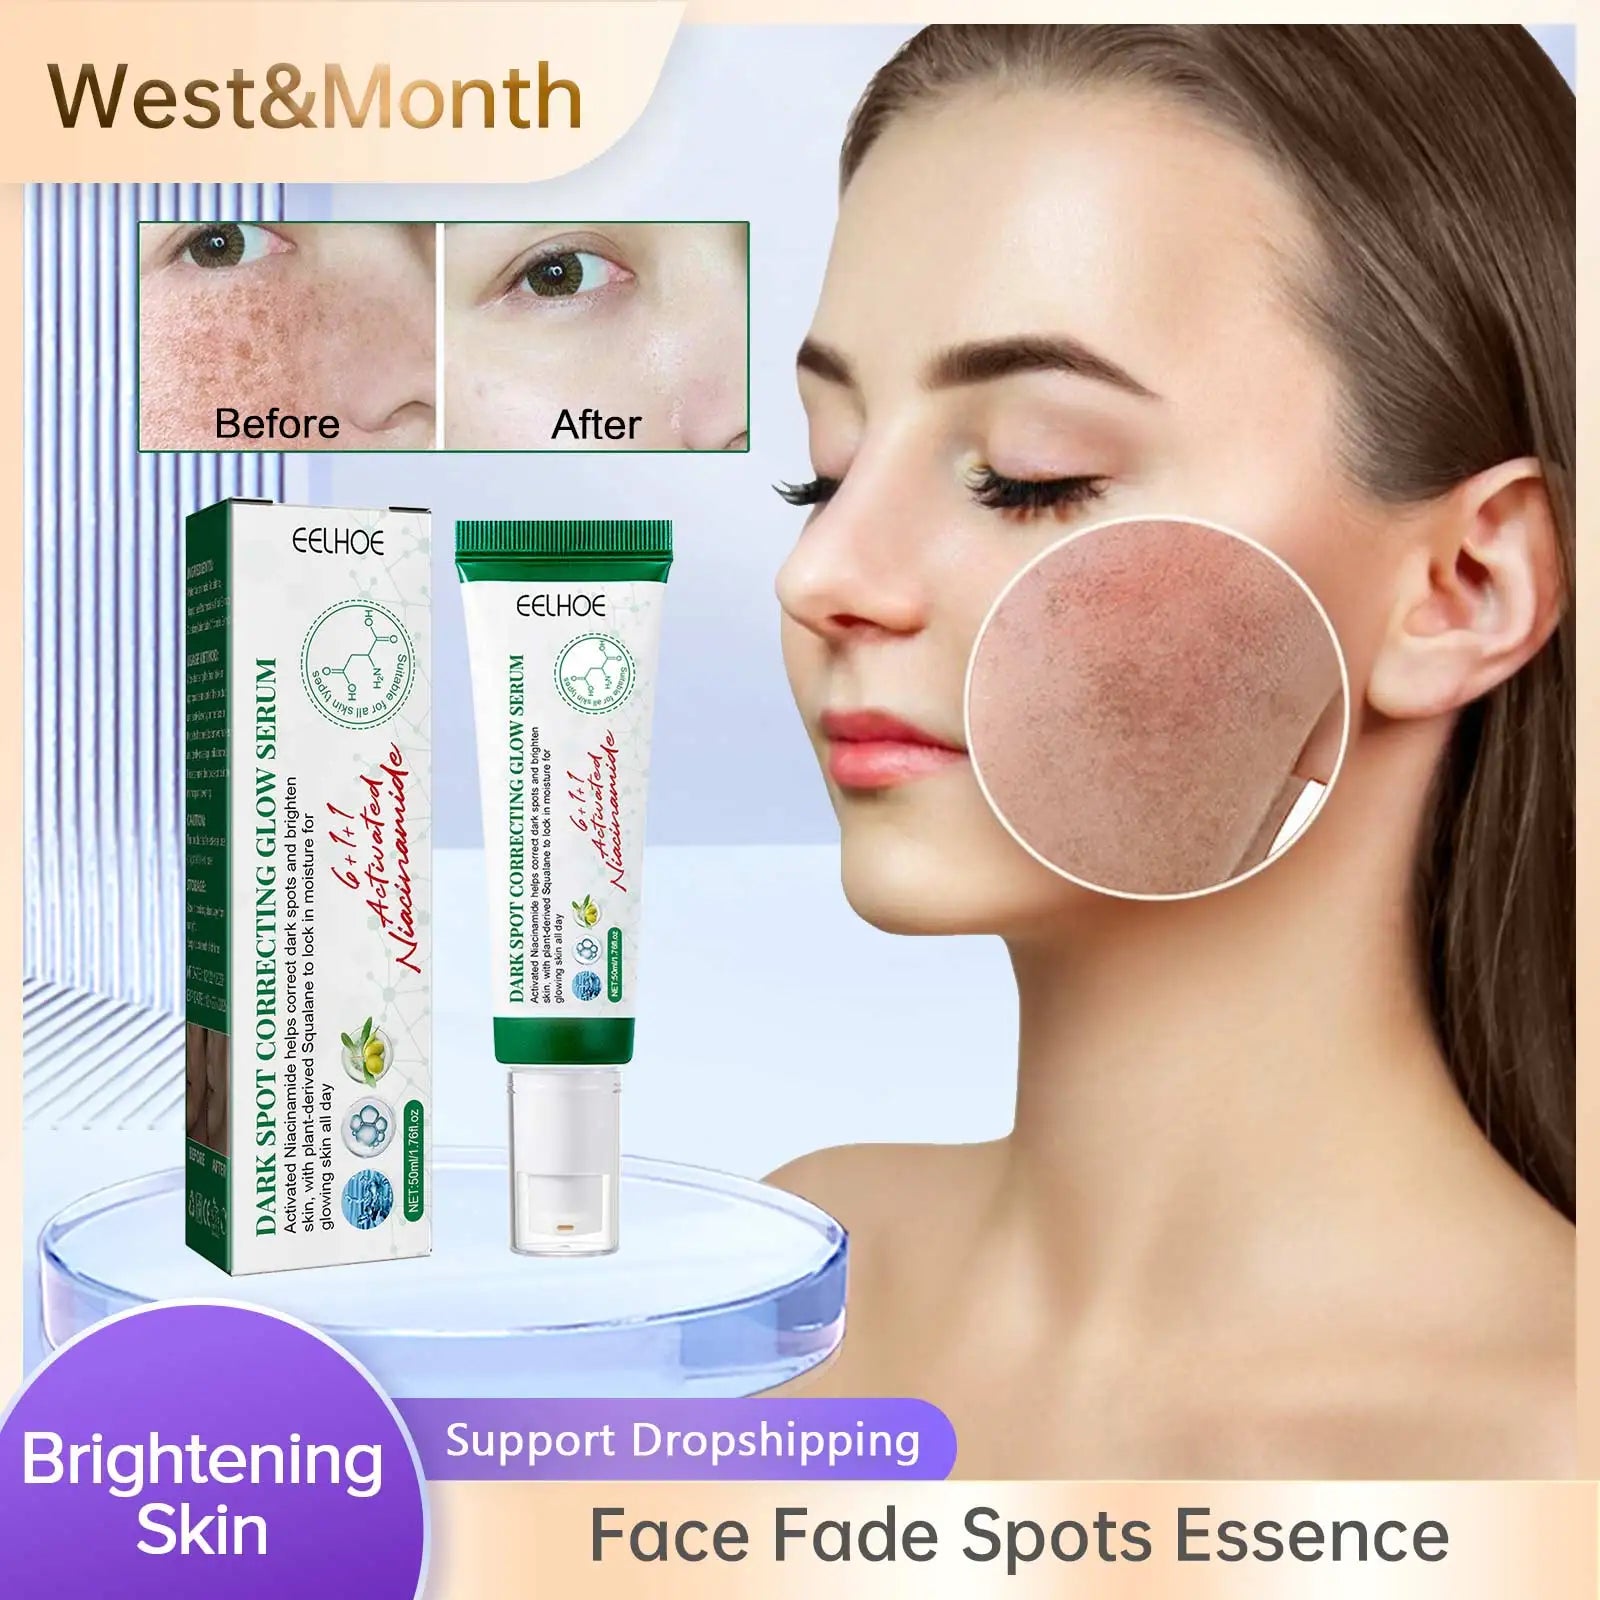 Dark Spot Correcting Glow Serum Fade Pigment Freckle Melasma Melanin Improves Dull Skin Facial Whitening Brightening Essence